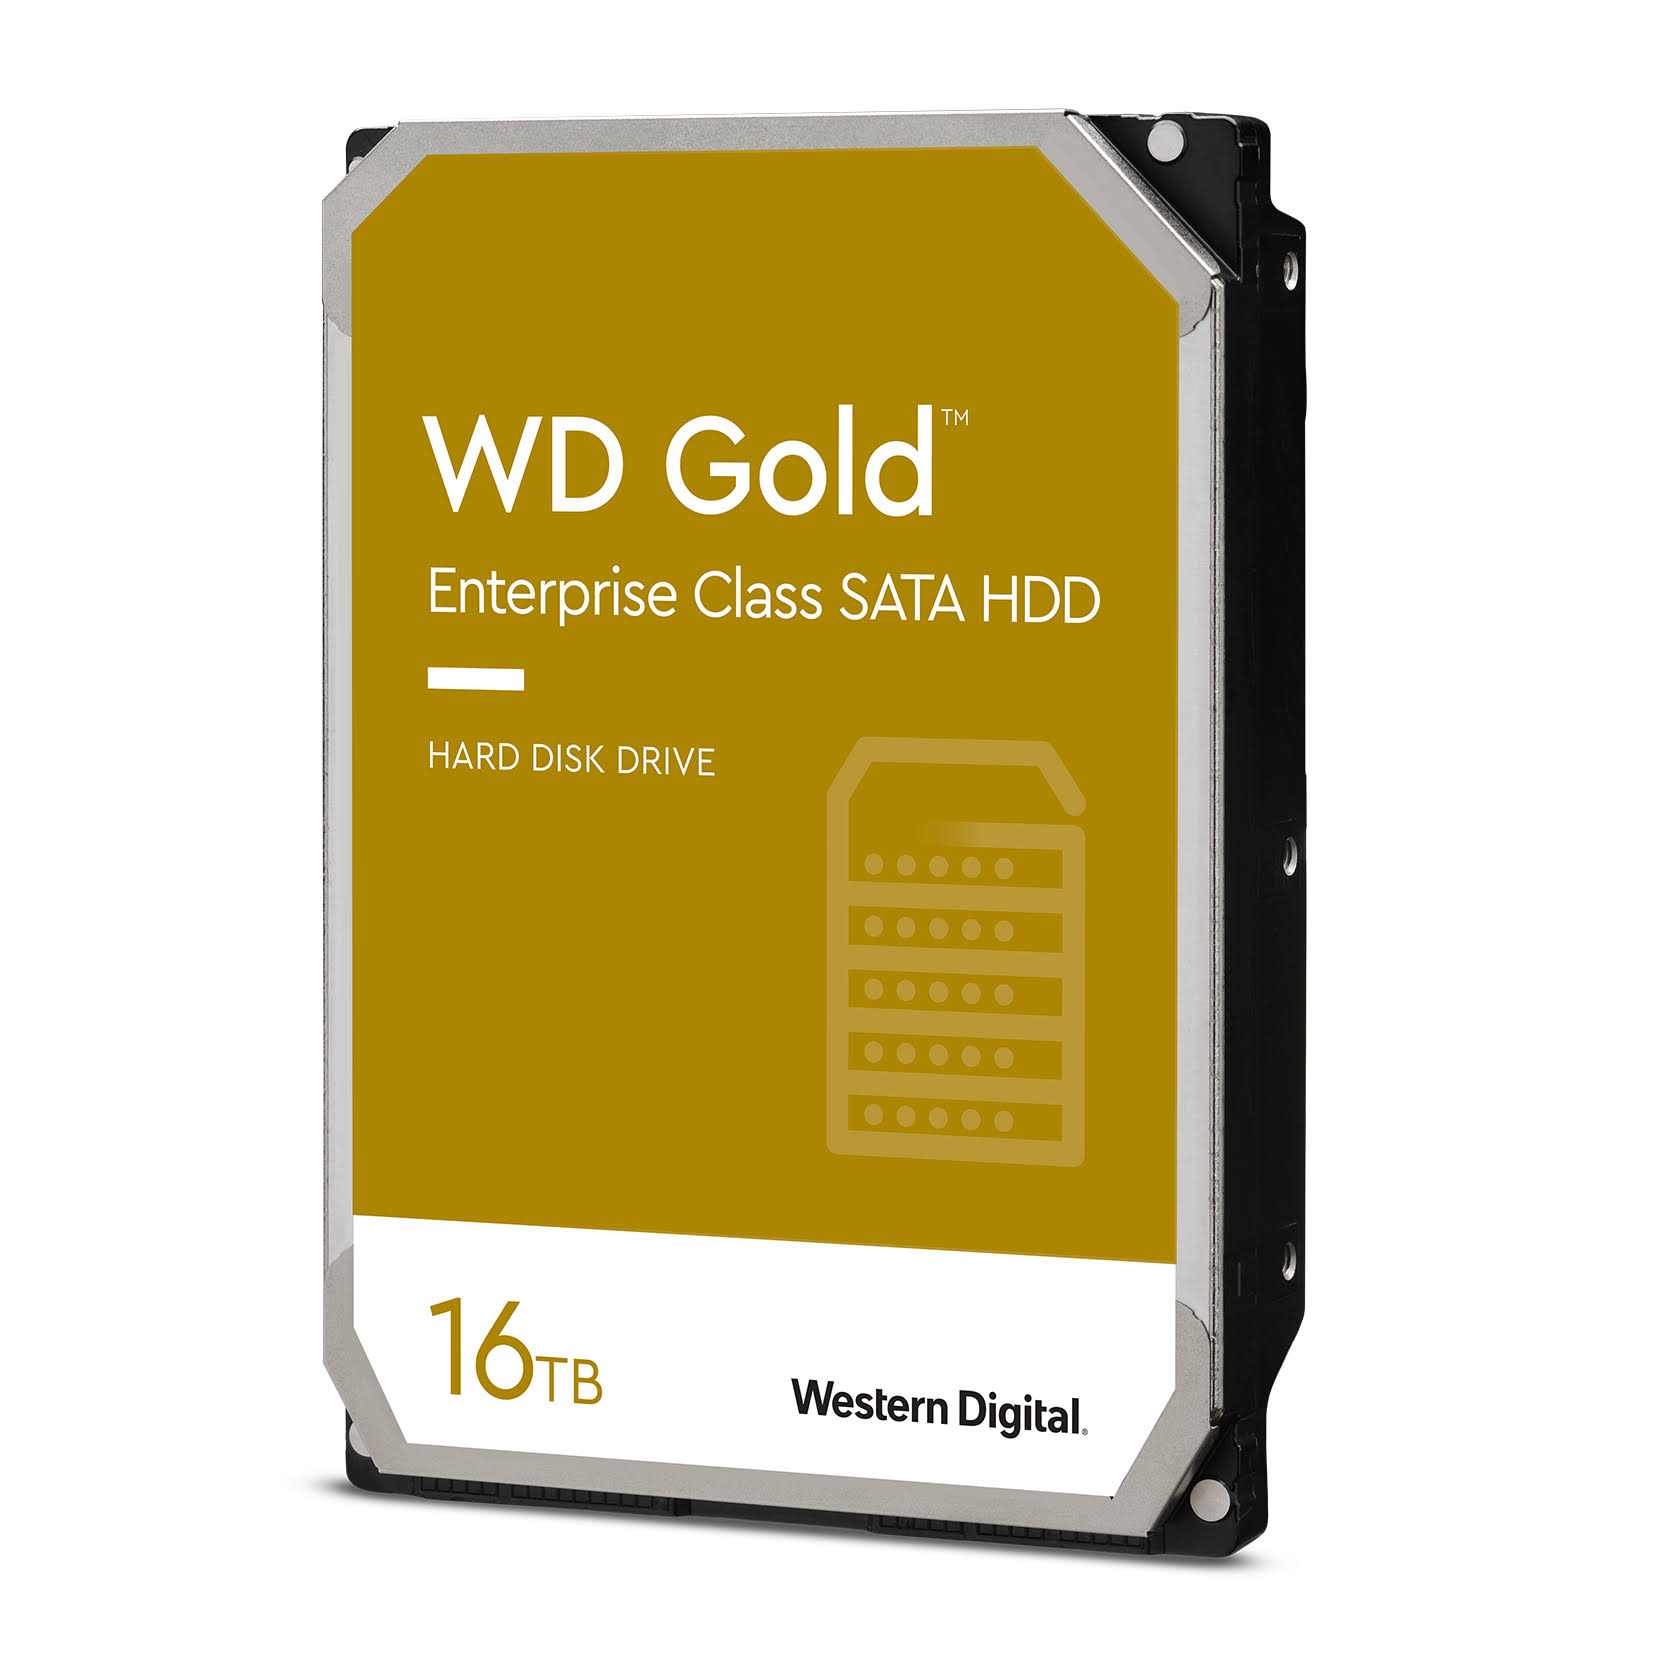 WD161KRYZ | WESTERN DIGITAL Wd161kryz Wd Gold 16tb 7200rpm Sata-6gbps 512mb Buffer 3.5 Internal Enterprise Class Hard Disk Drive